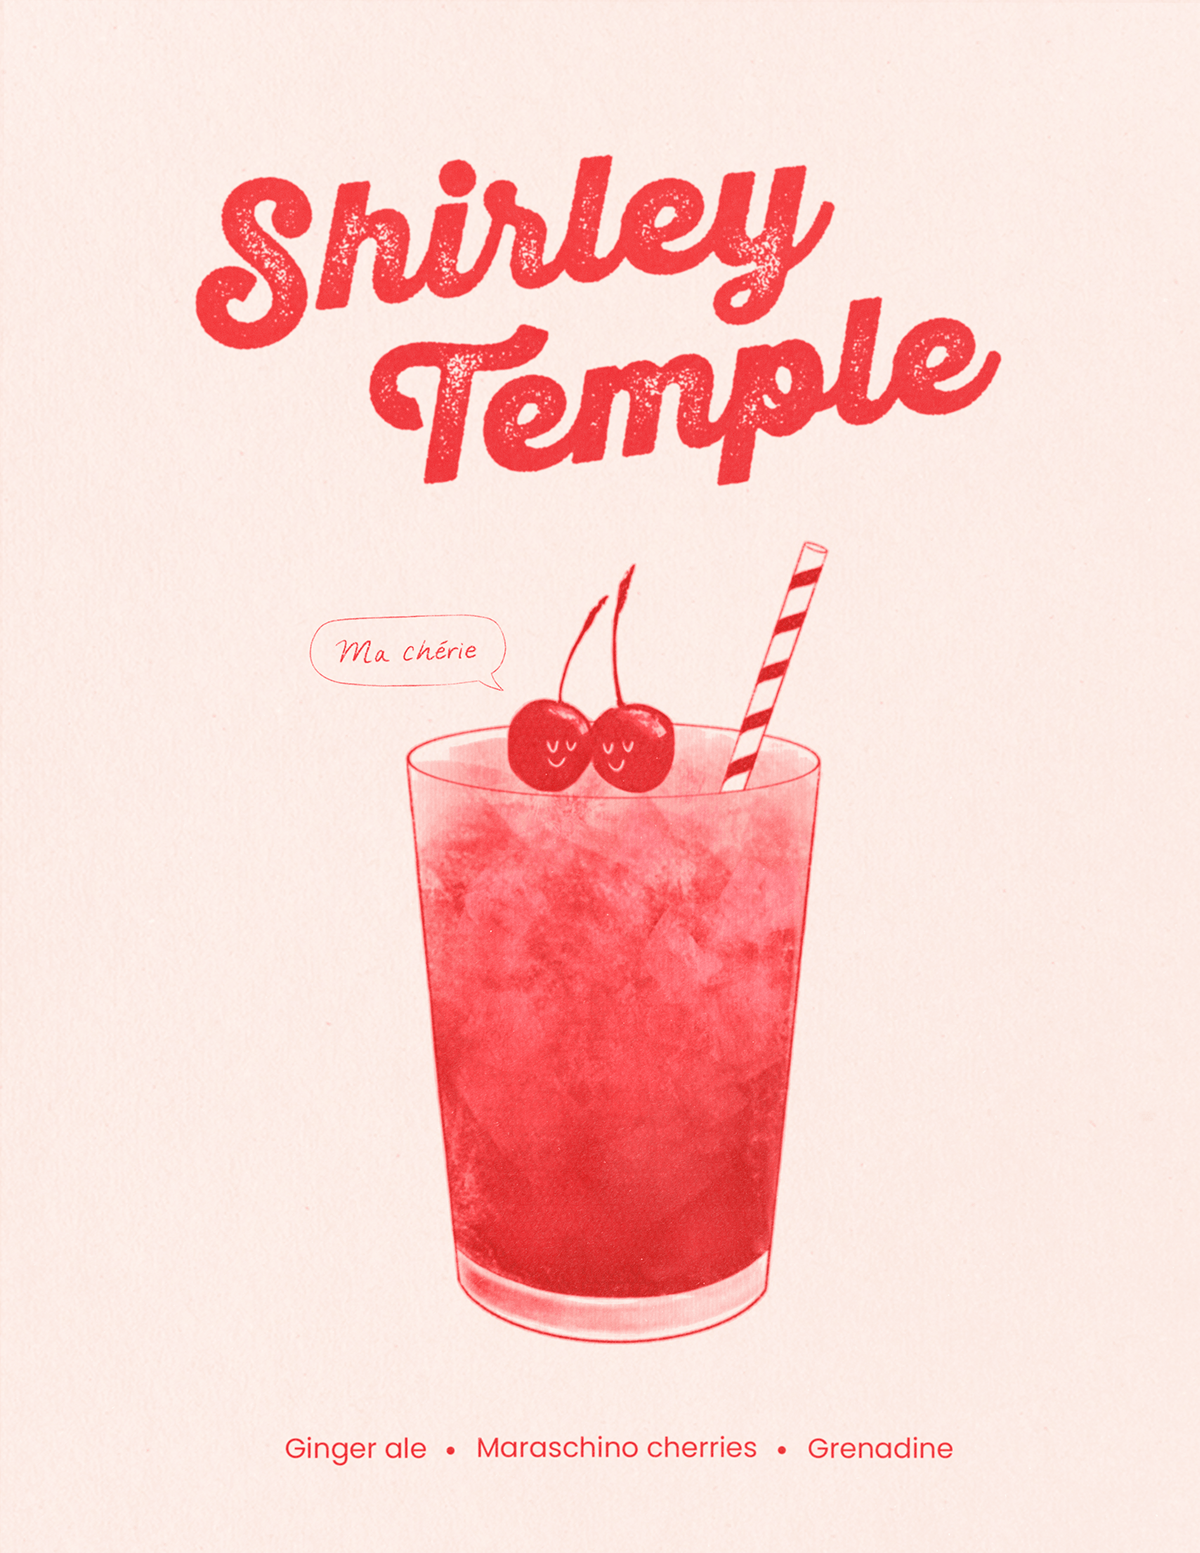 Cherries design digital illustration drink illustration drink poster ILLUSTRATION  Poster Design Procreate shirley temple wall decor